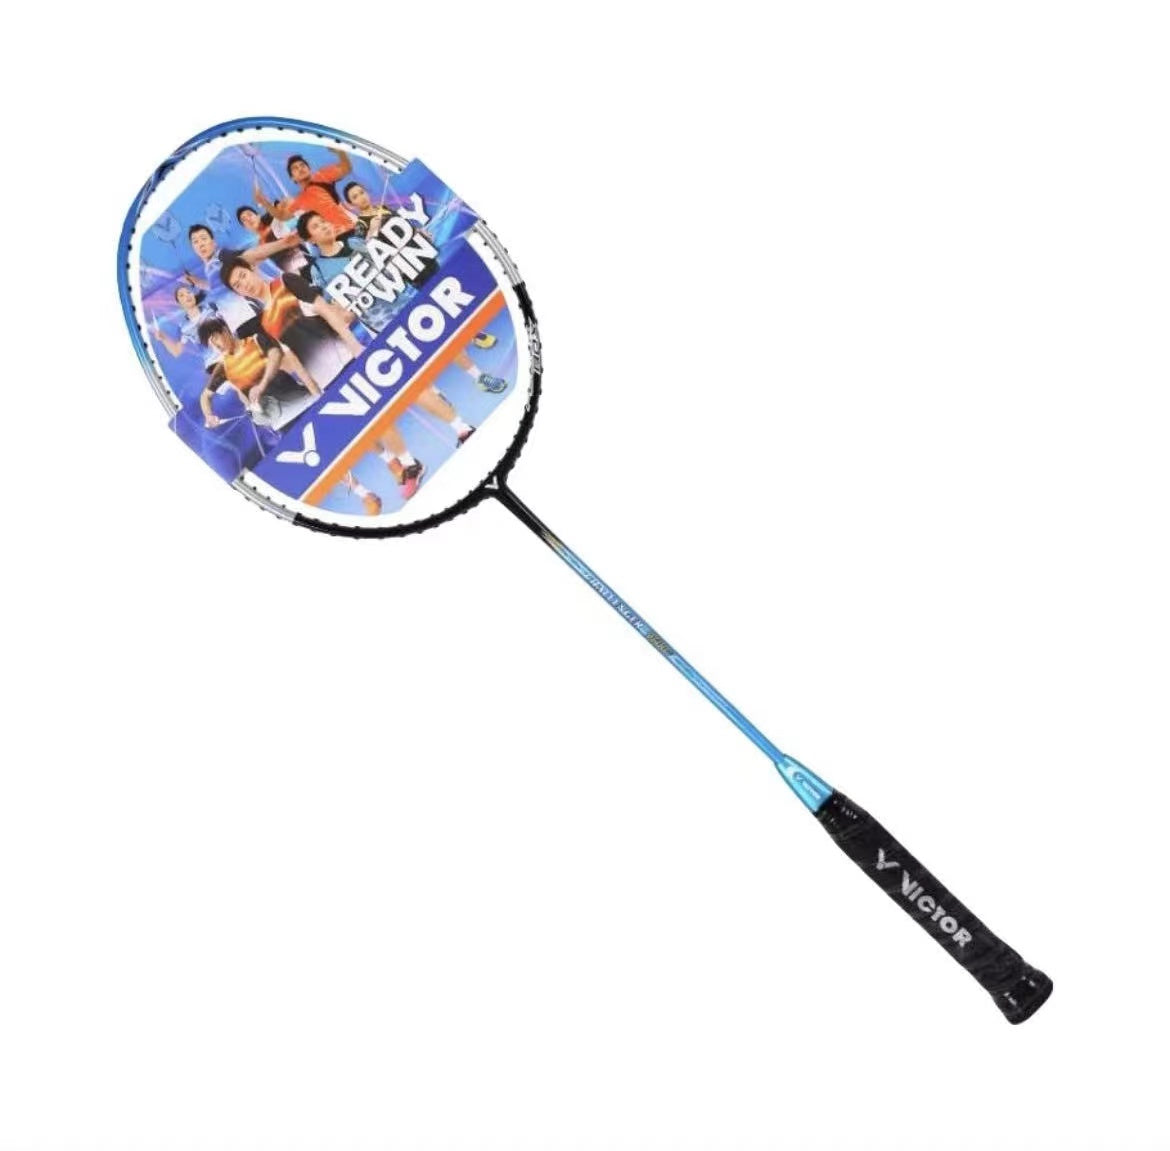 Victor Challenger CHA-9500 Badminton Racket